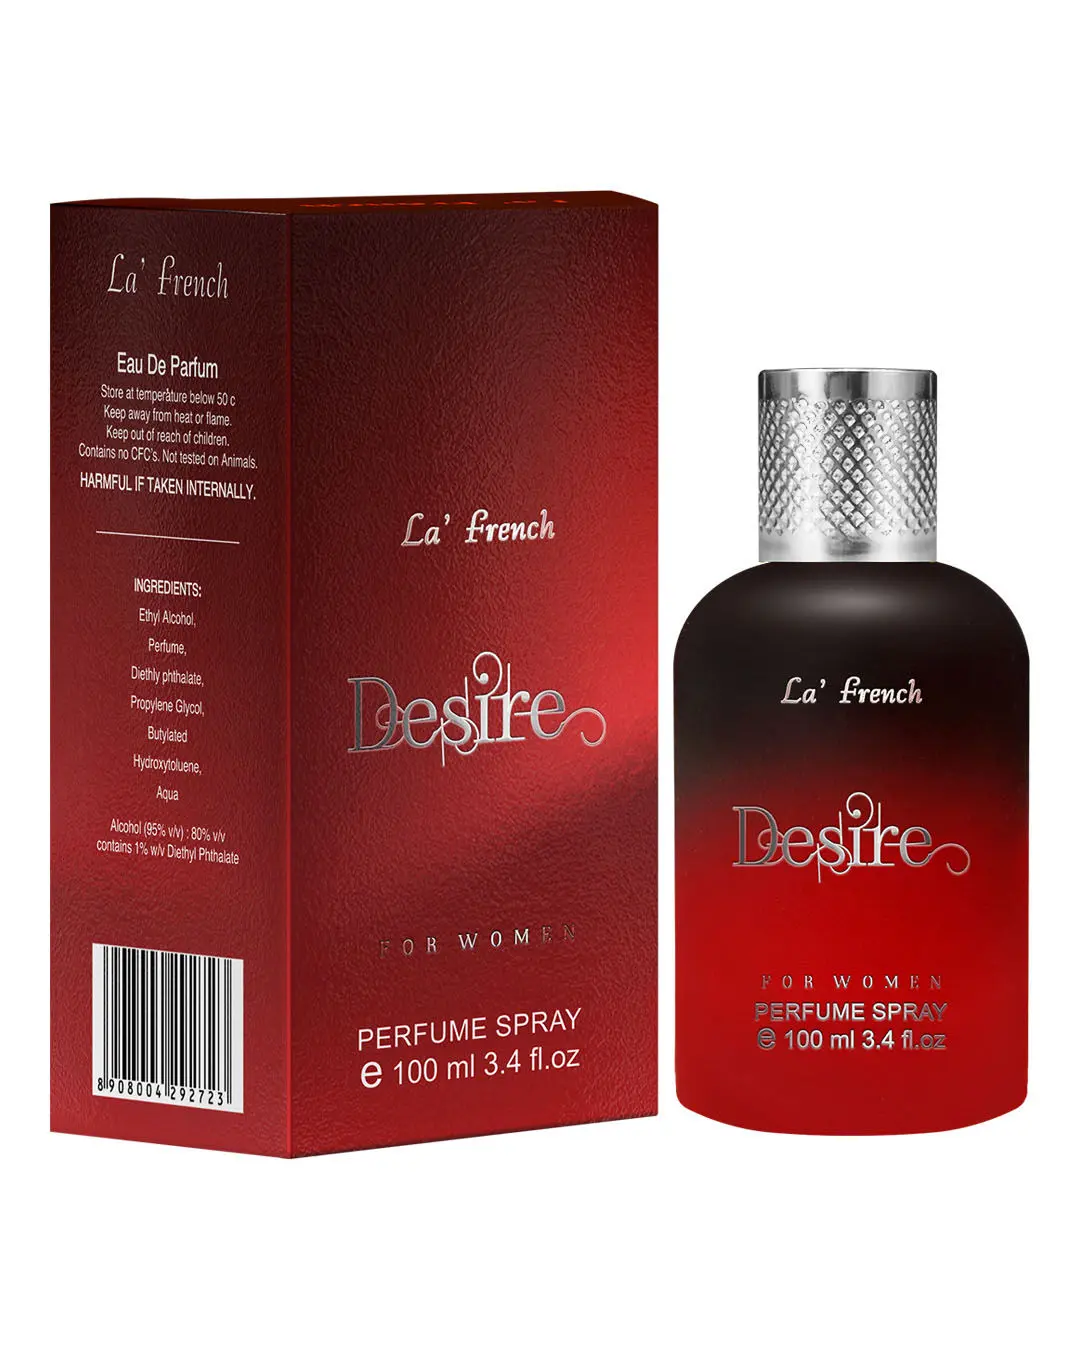 LA' French Desire Perfume By La' French, Eau De Parfum (100 ml) - Ideal Women